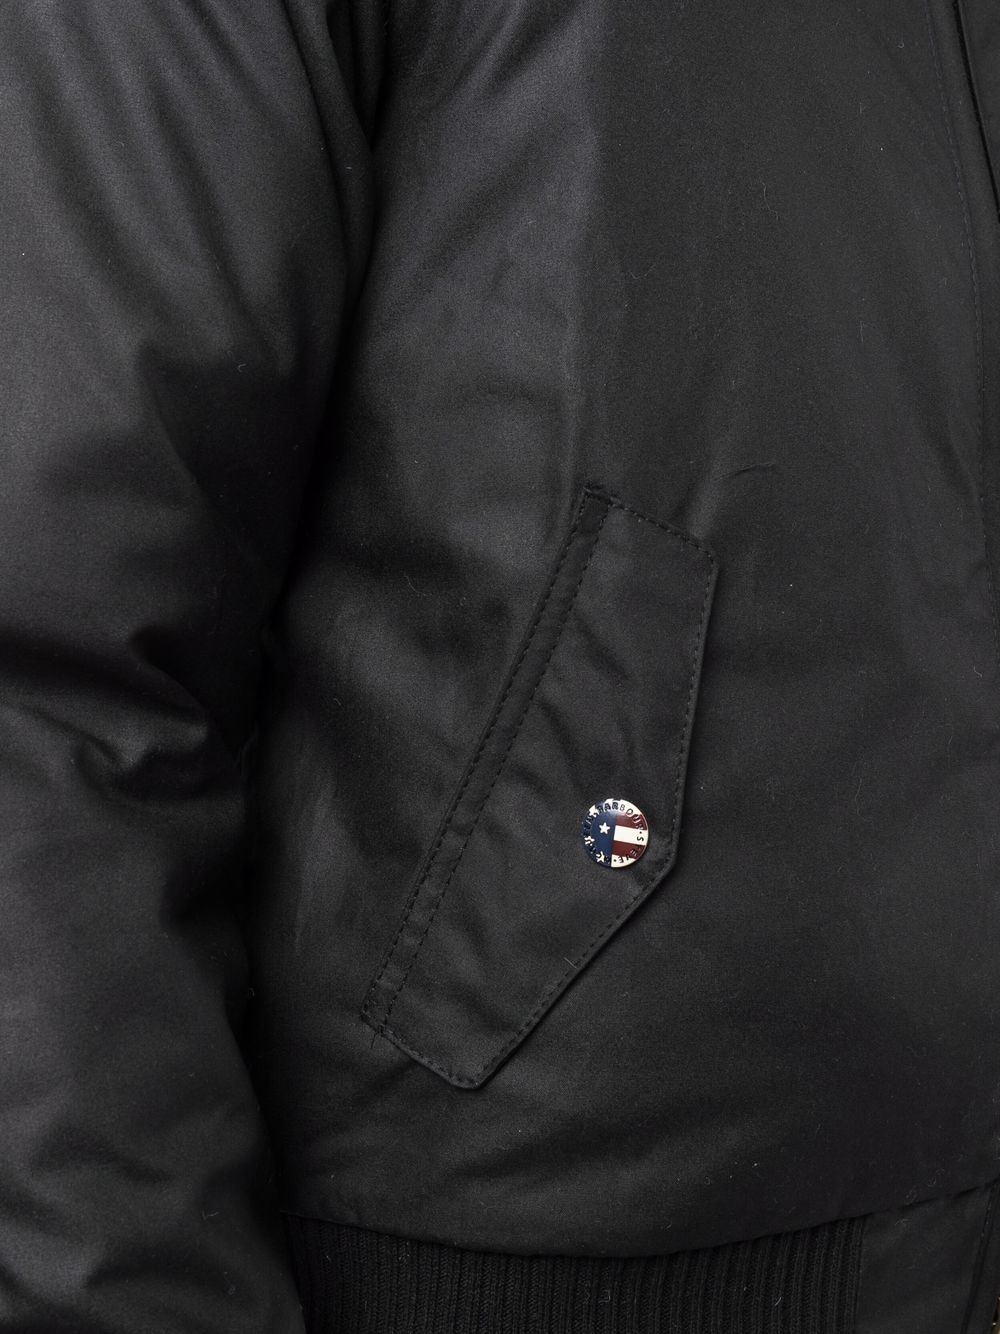 Steve McQueen black jacket